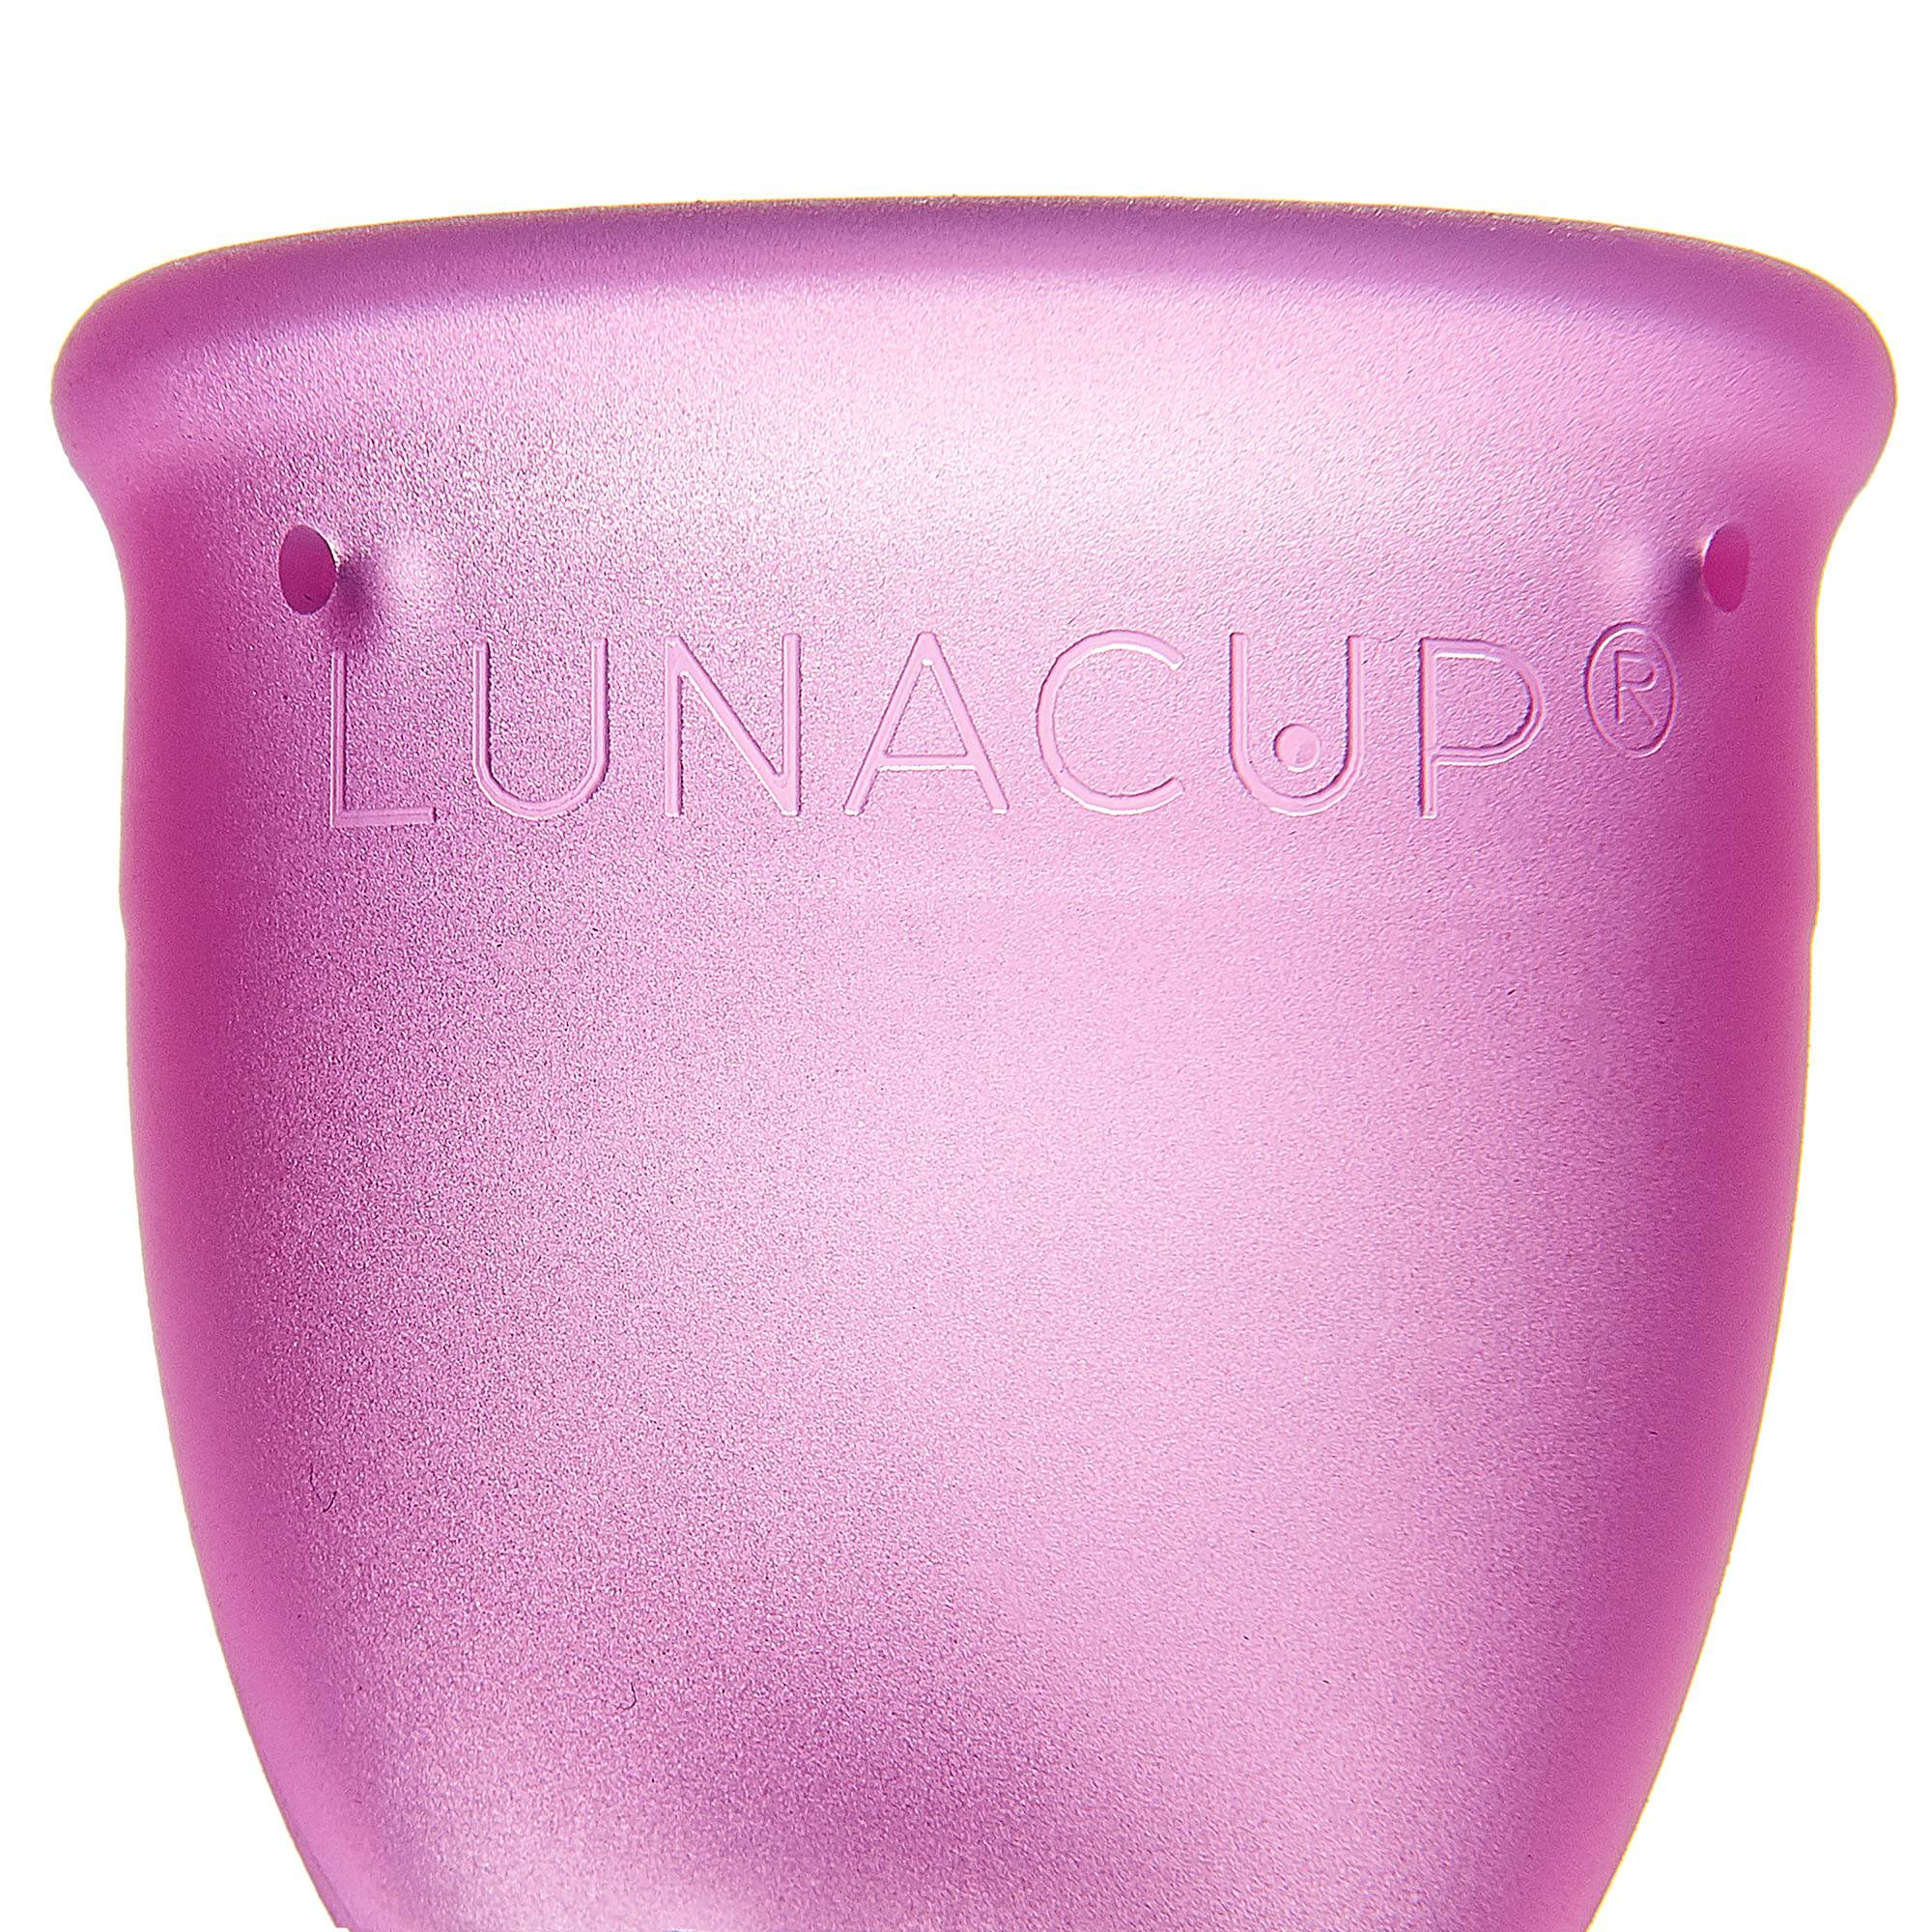 Menstrualna skodelica LUNACUP podrobnosti na zgornjem robu